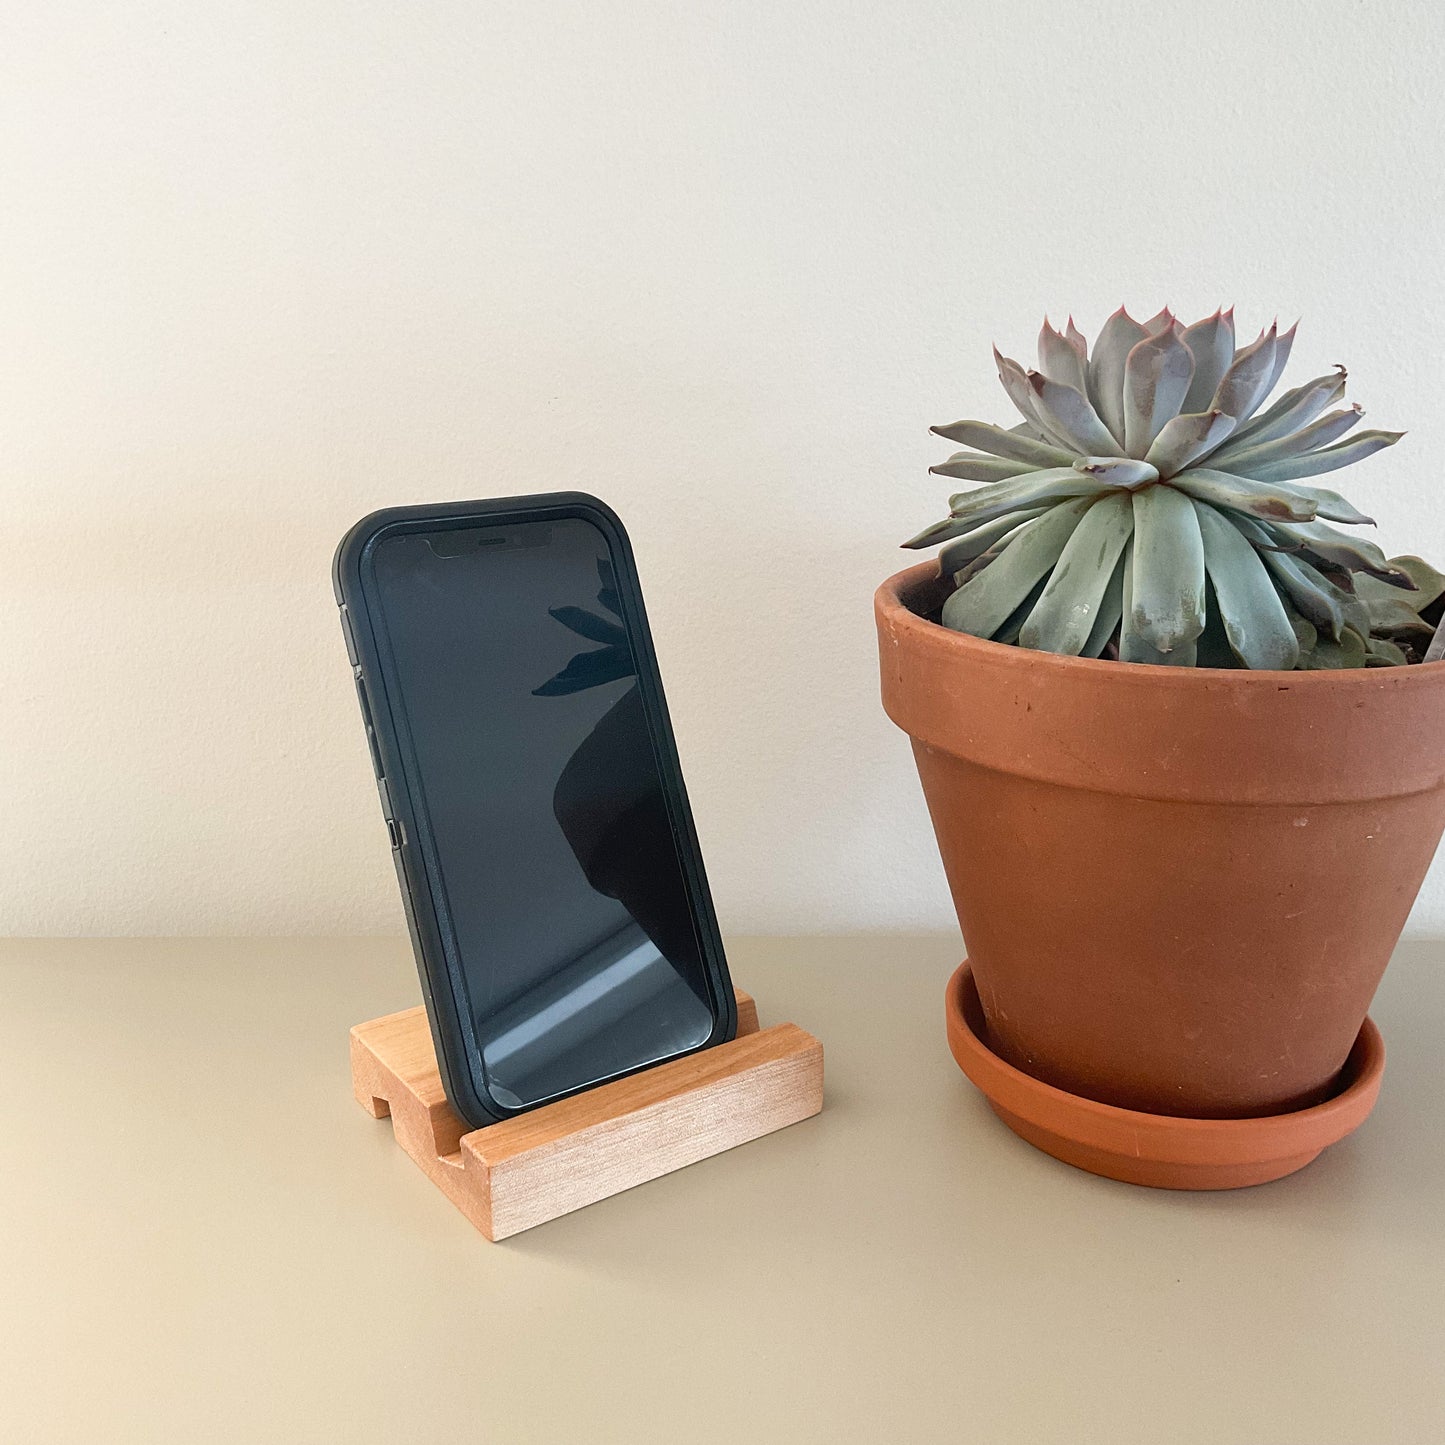 Birch Wood Phone Stand